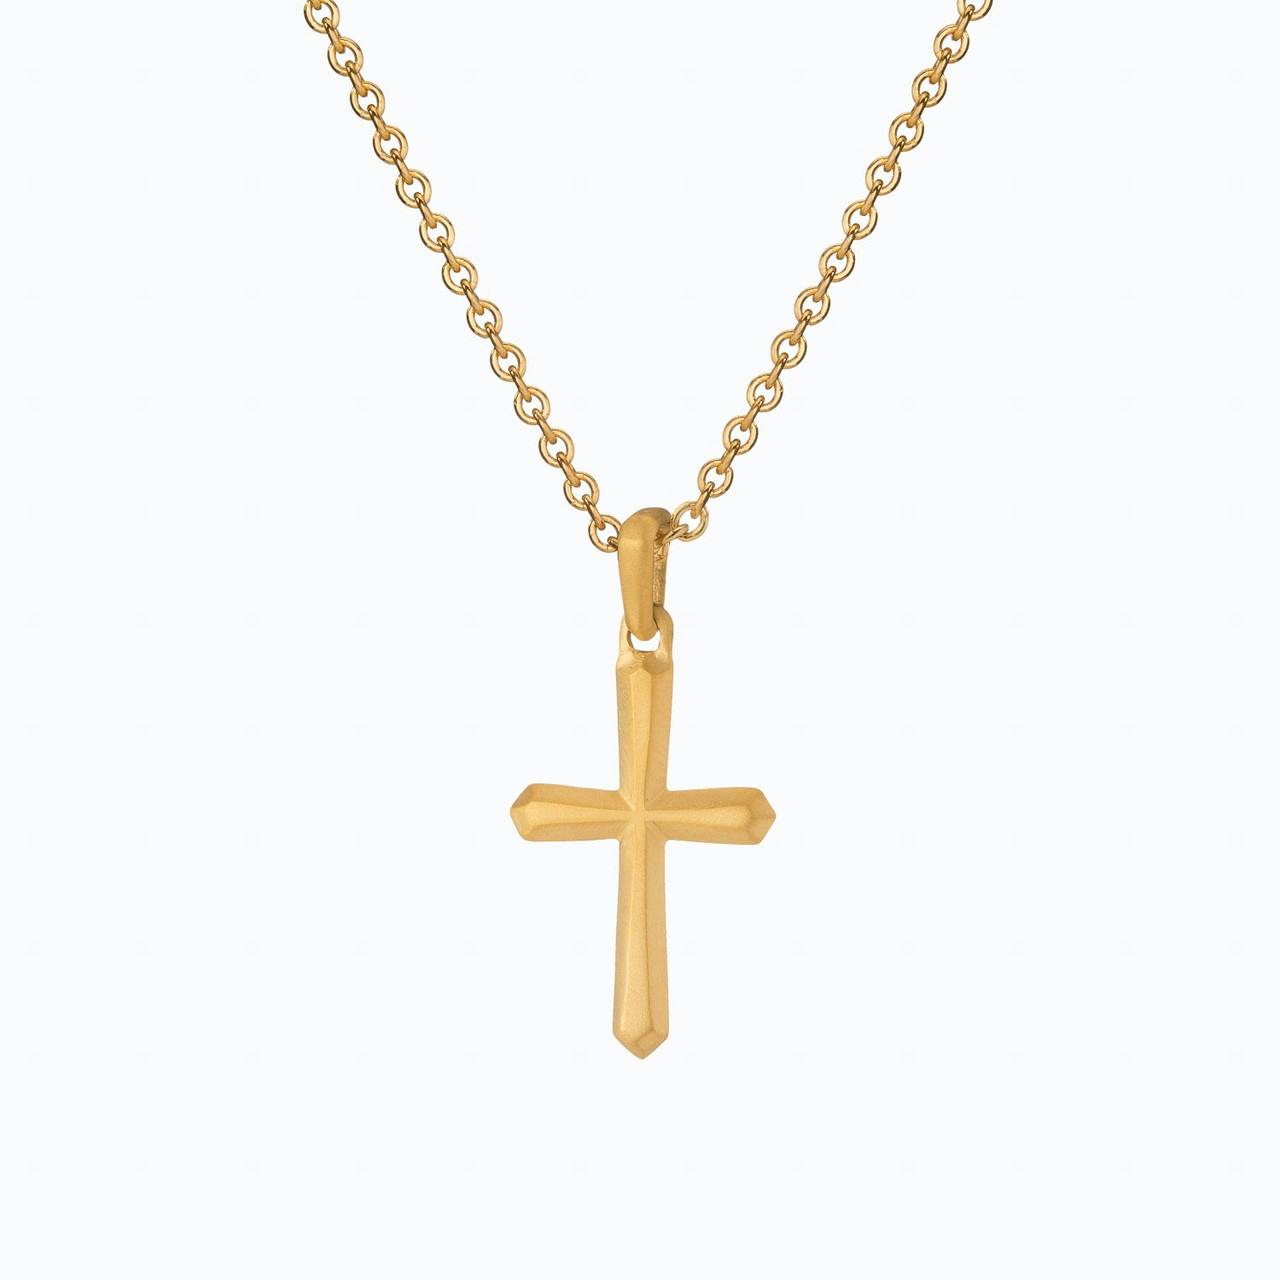 Roman Cross pendant on 24K chain